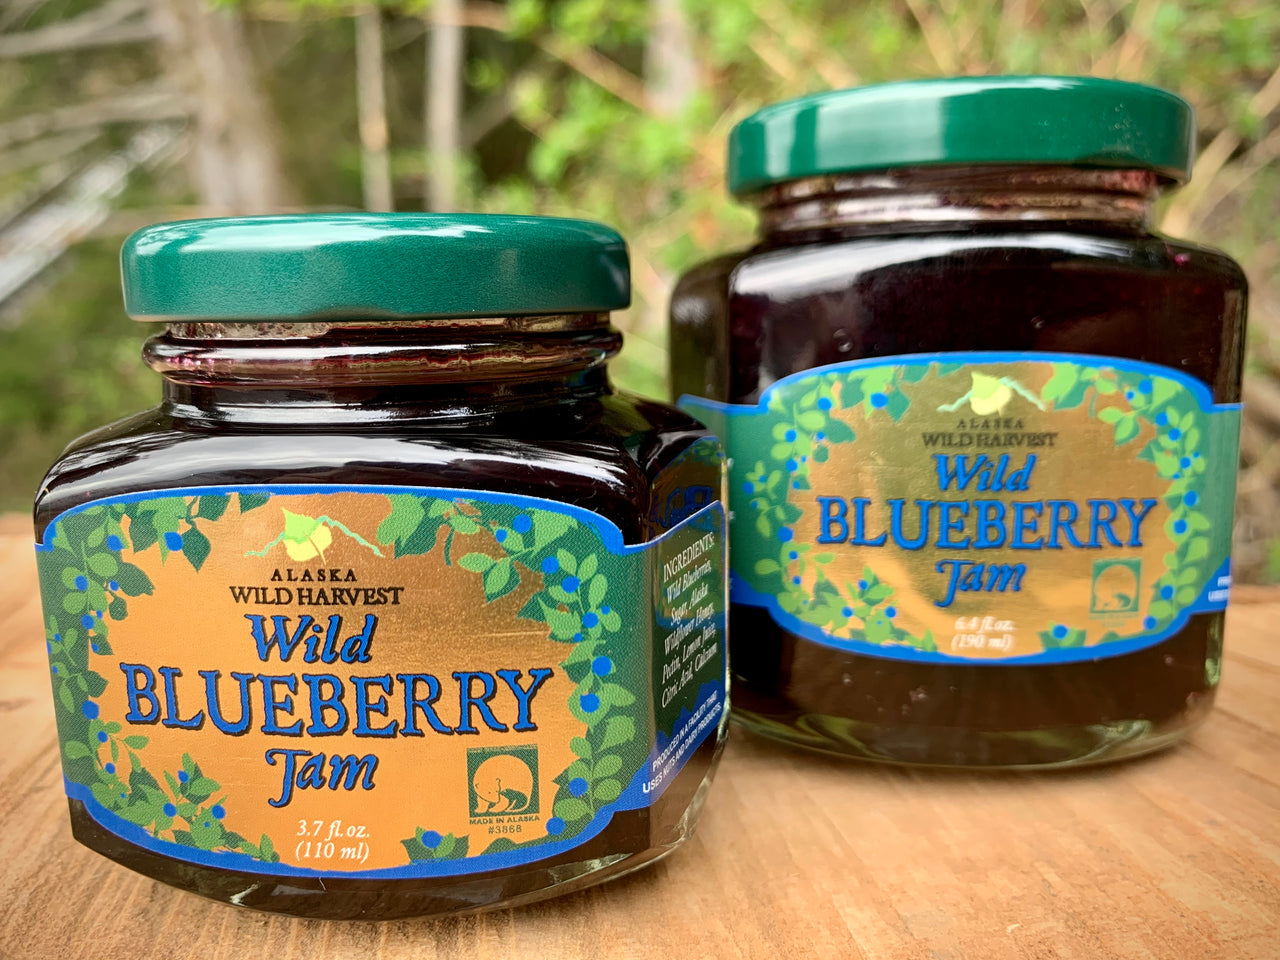 Alaska Wild Blueberry Jam